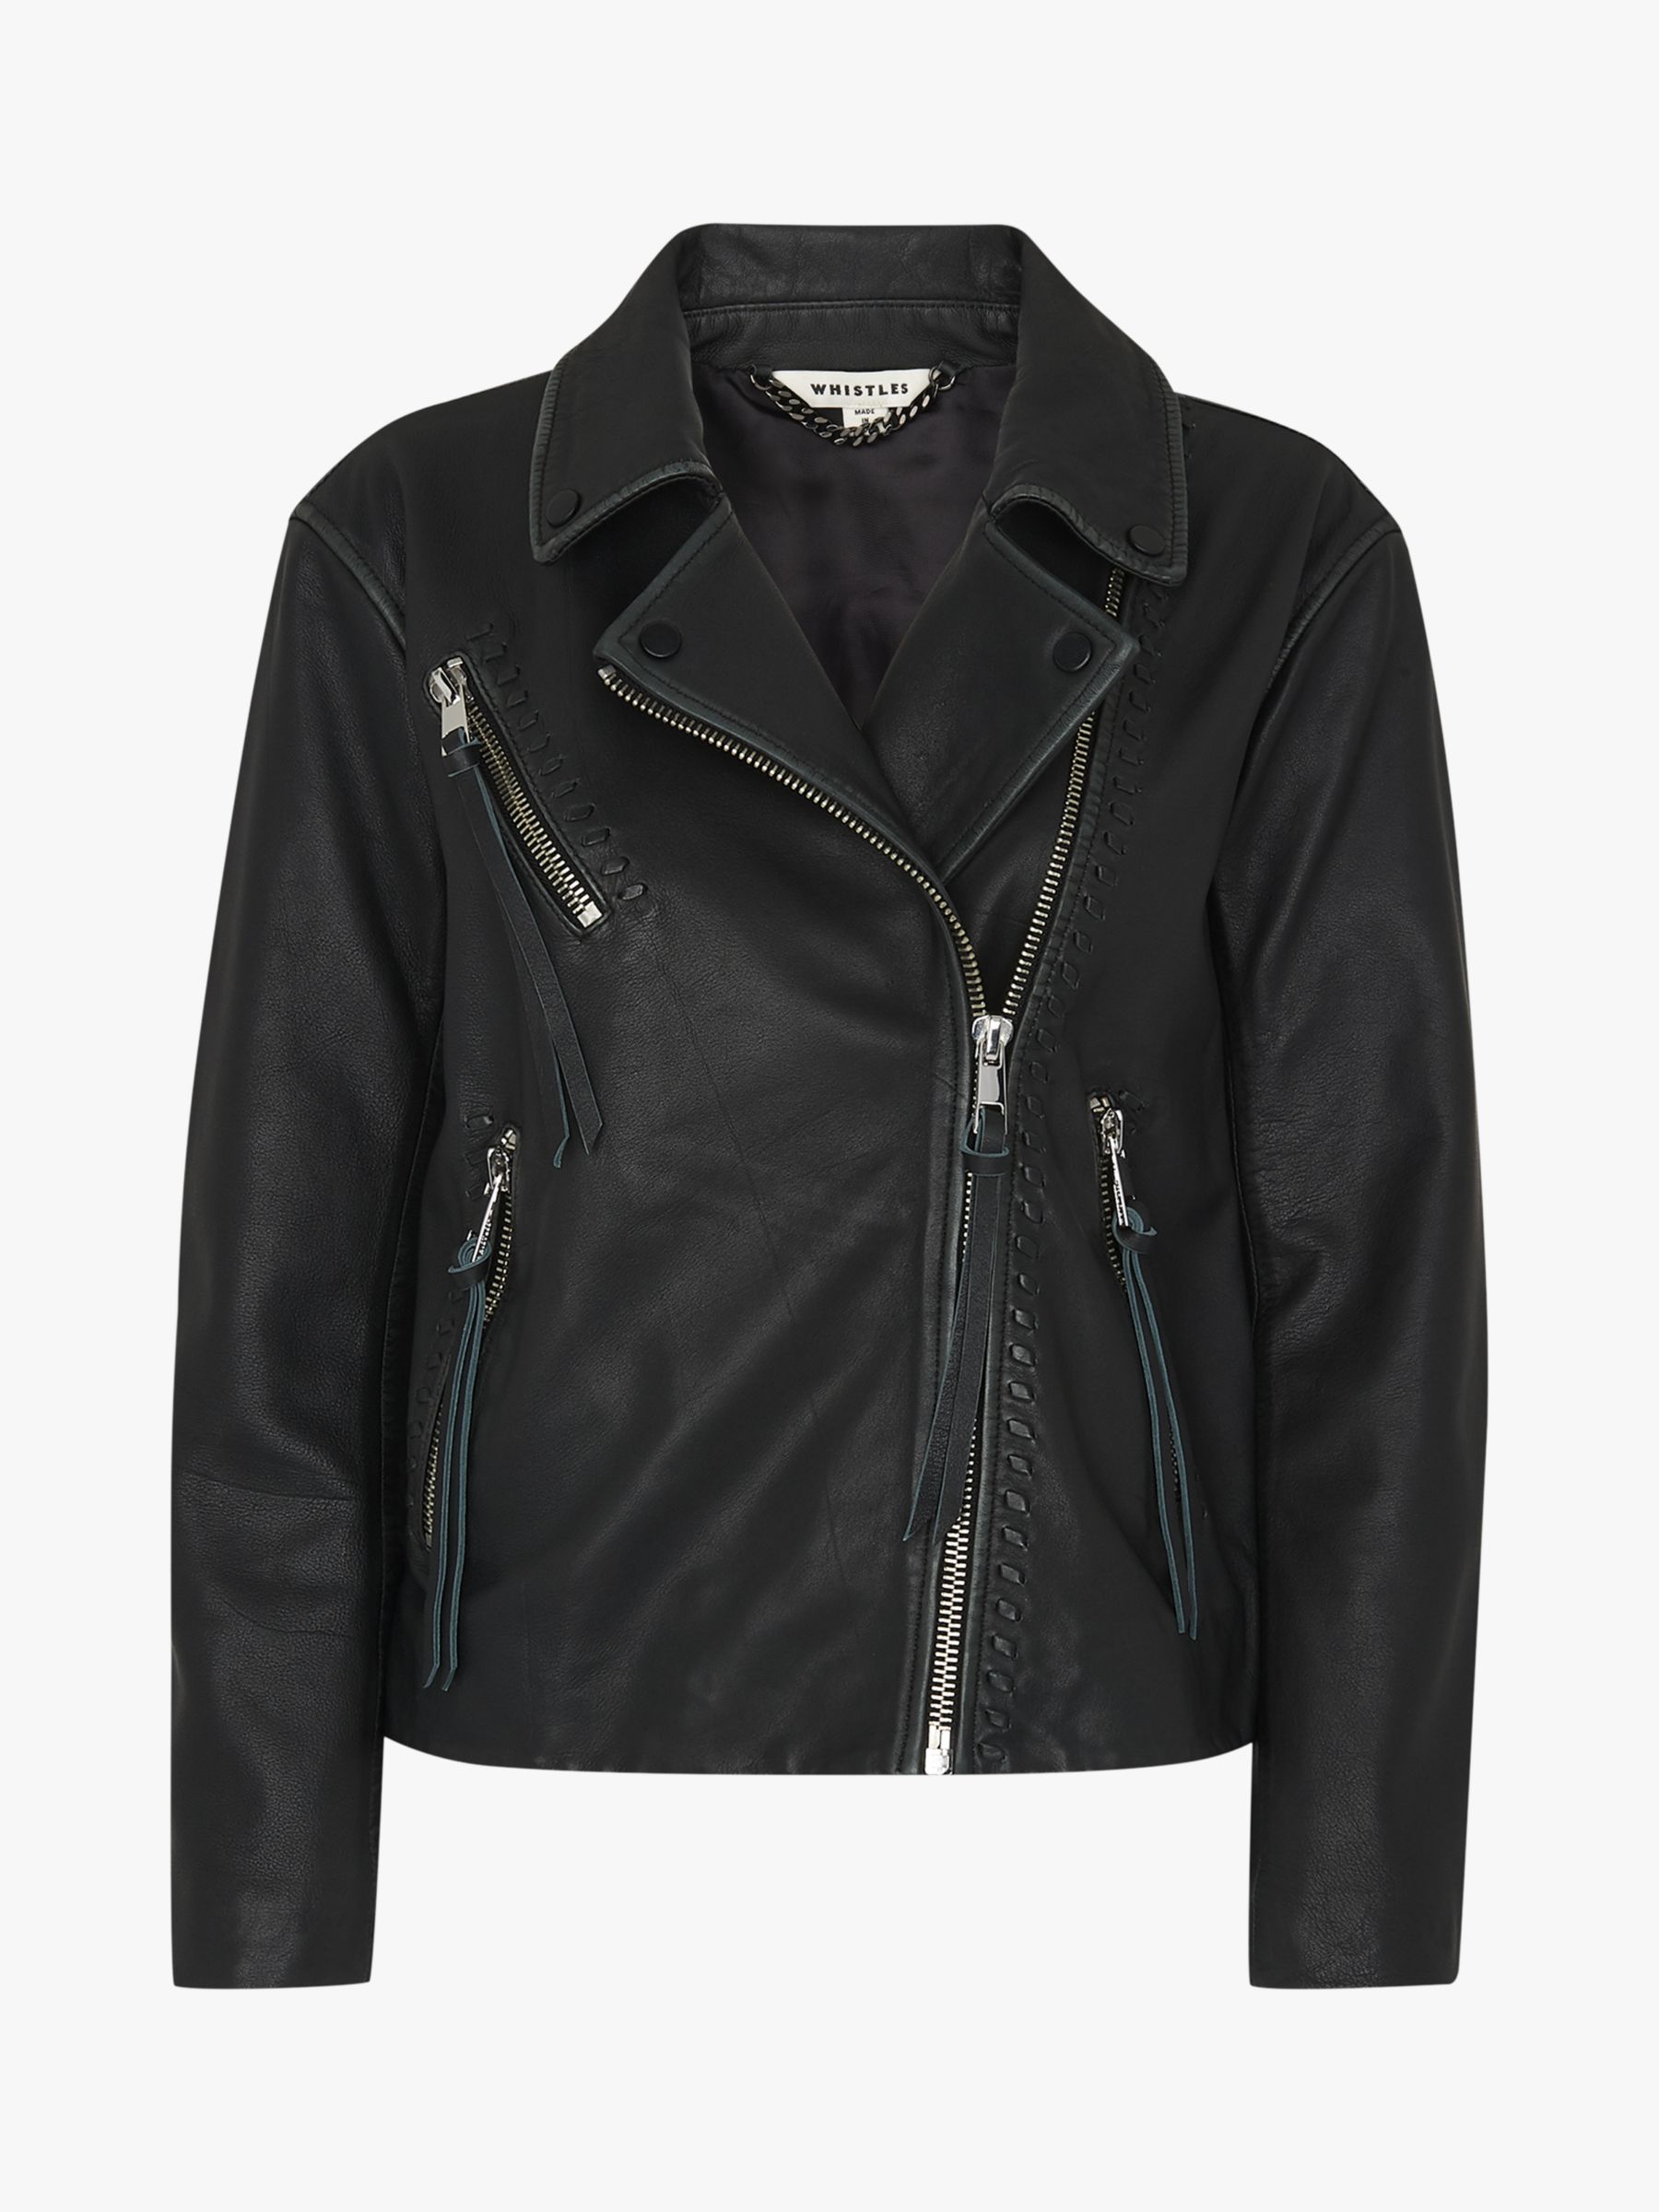 Whistles Tessa Tumbled Leather Jacket, Black at John Lewis & Partners